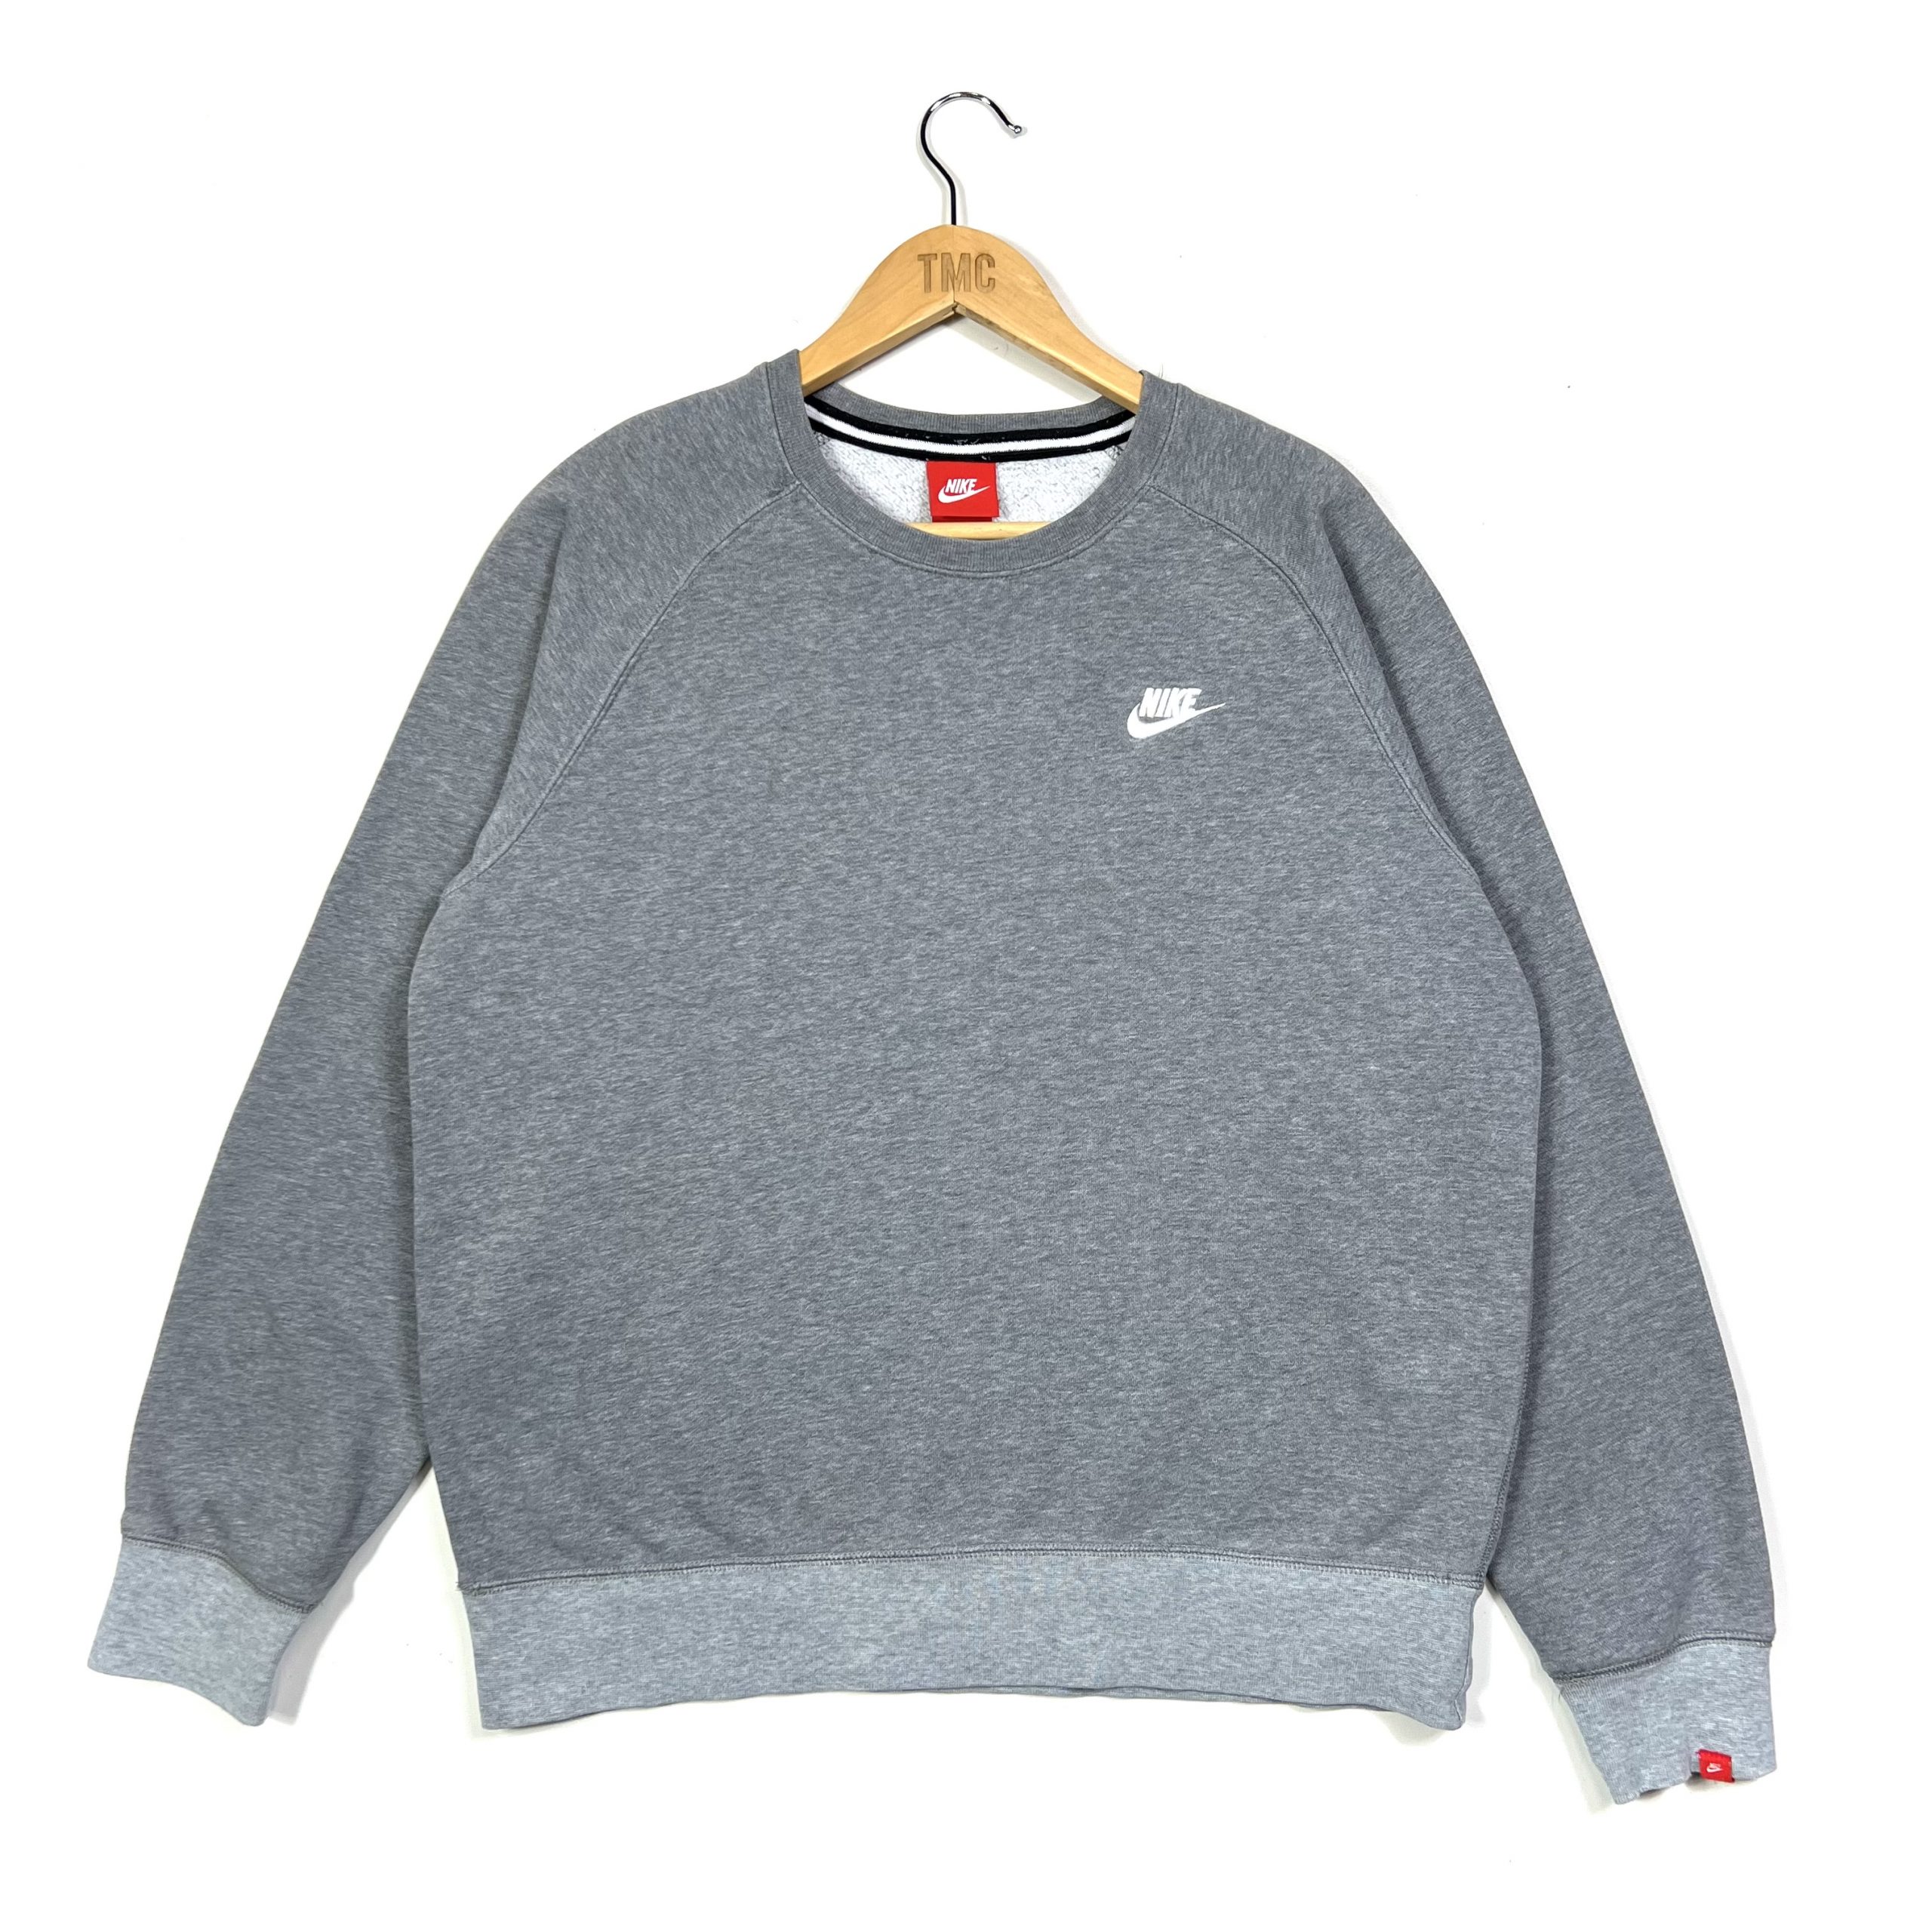 Nike Sweatshirt - Grey - M - TMC Vintage - Vintage Clothing